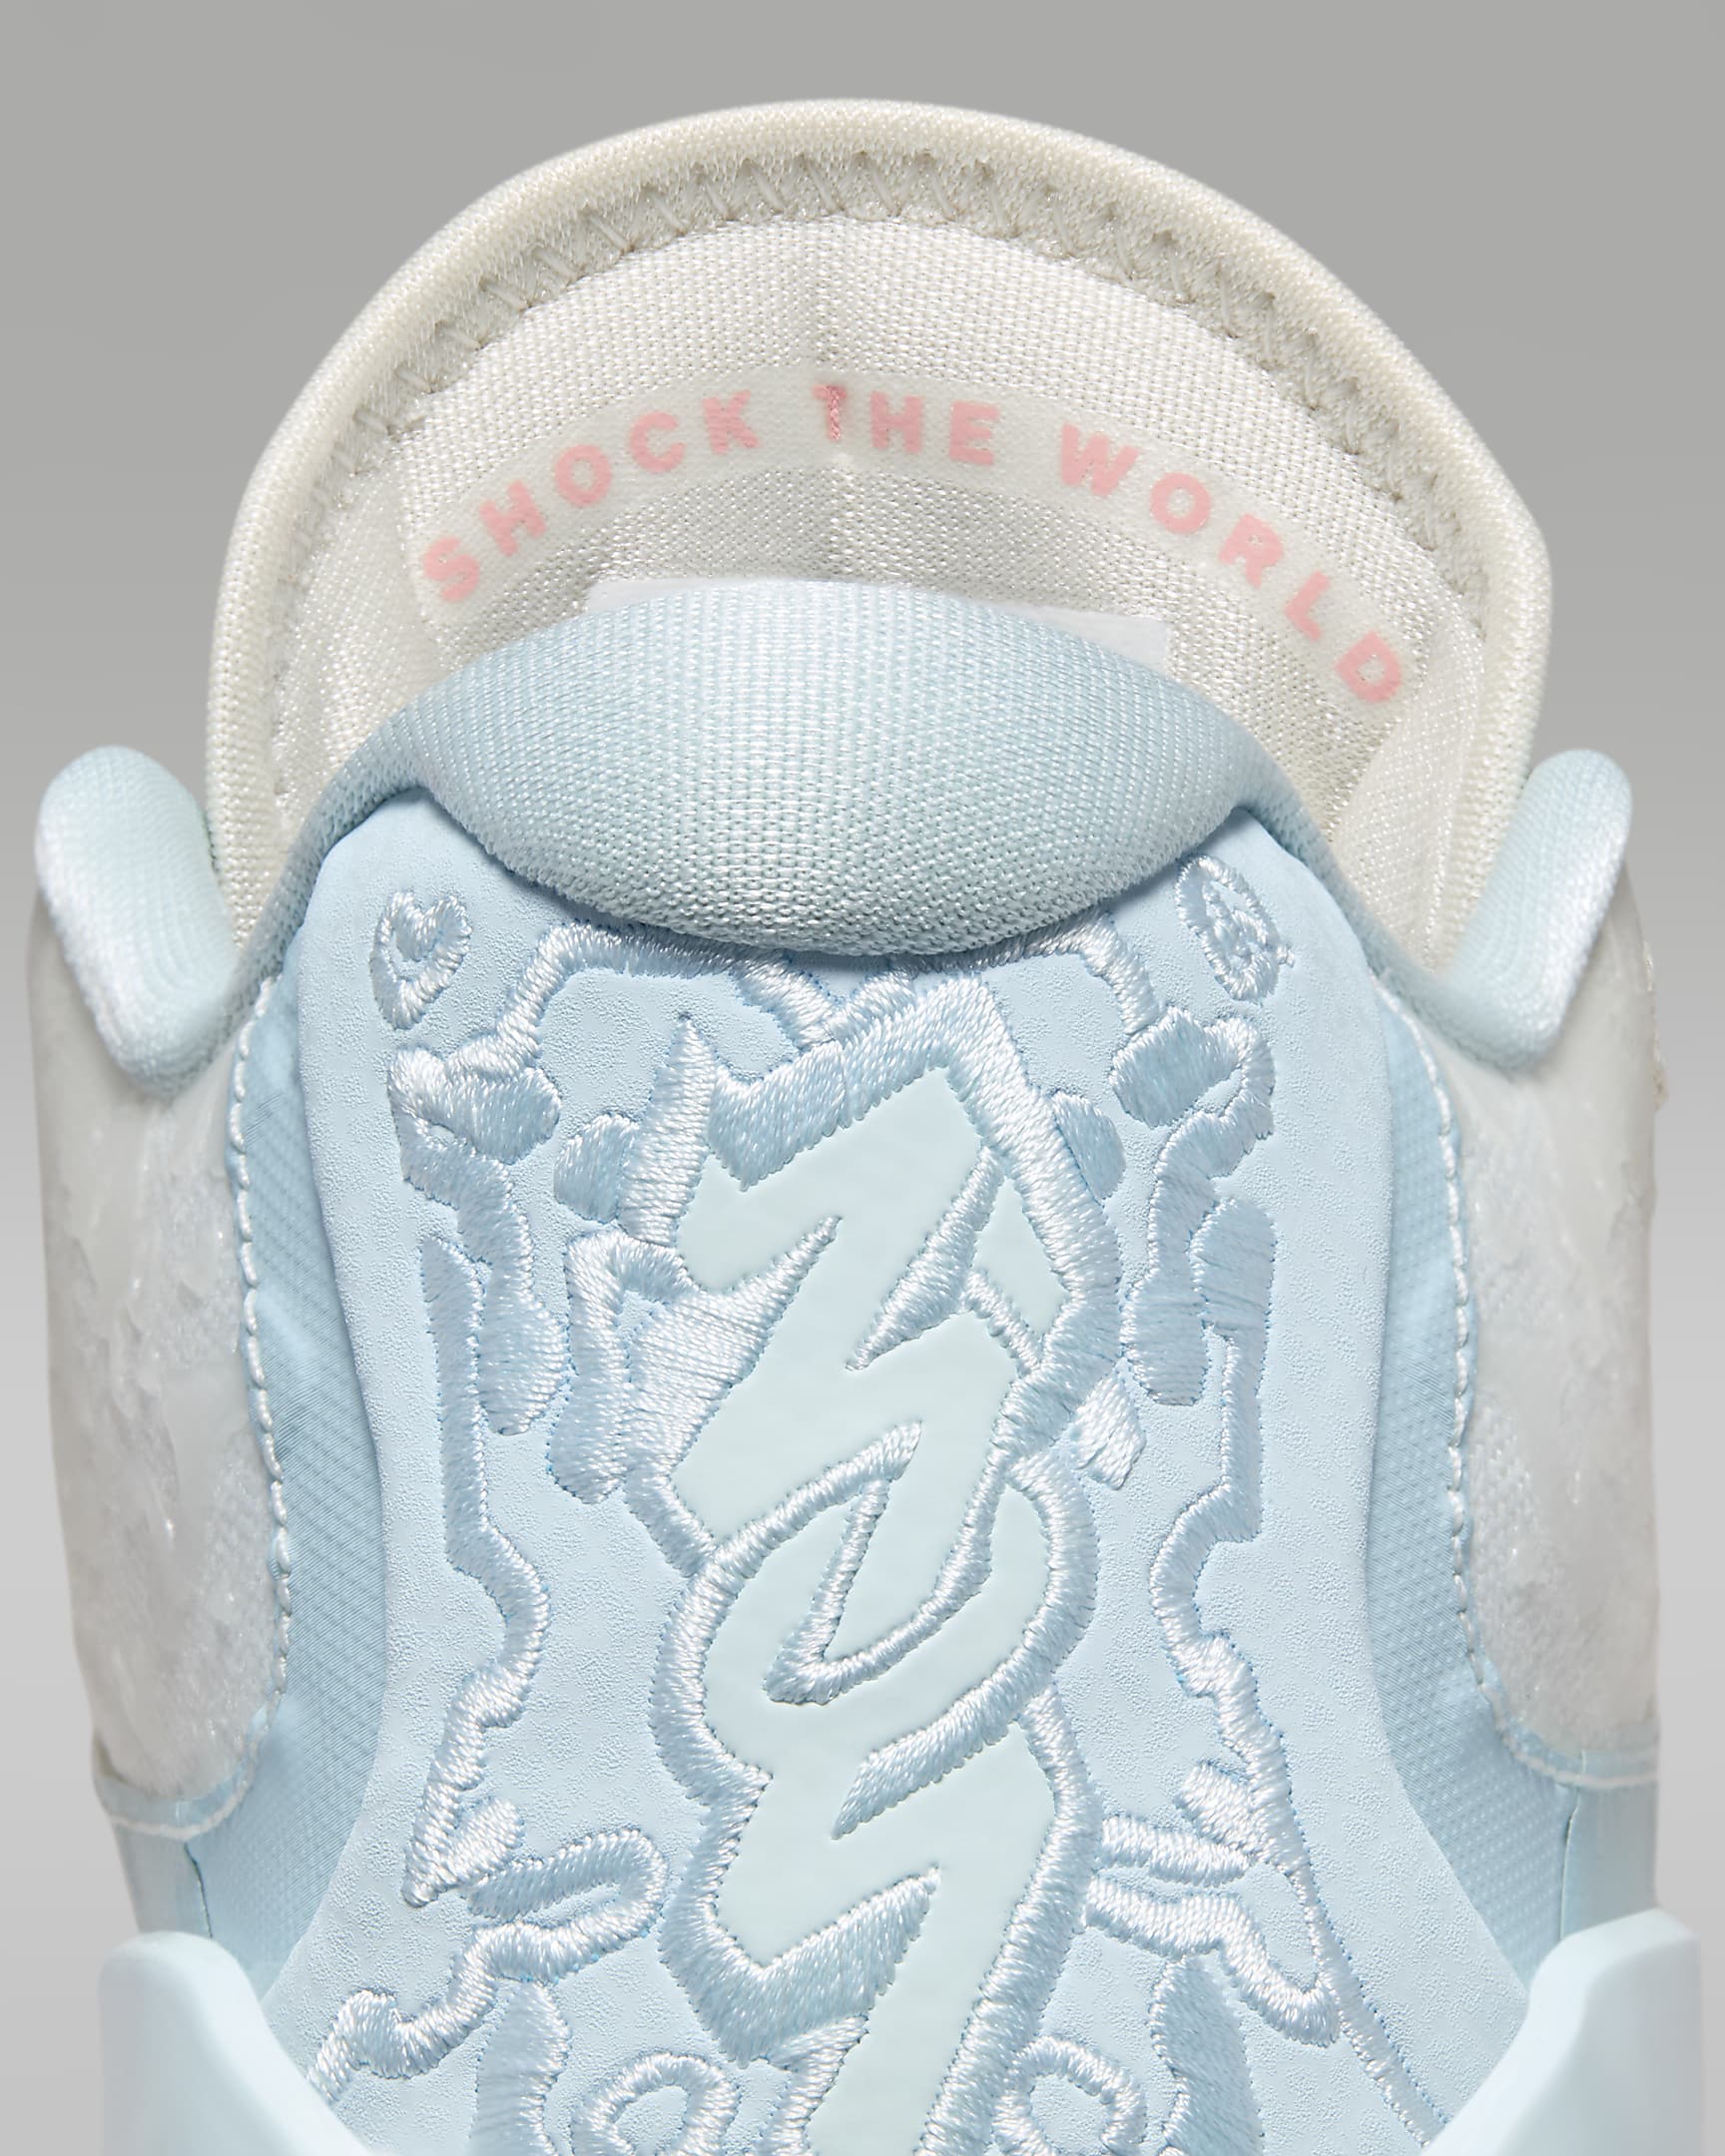 Zion 3 "Rising" Big Kids' Basketball Shoes - Bleached Coral/Pale Ivory/Glacier Blue/Crimson Tint